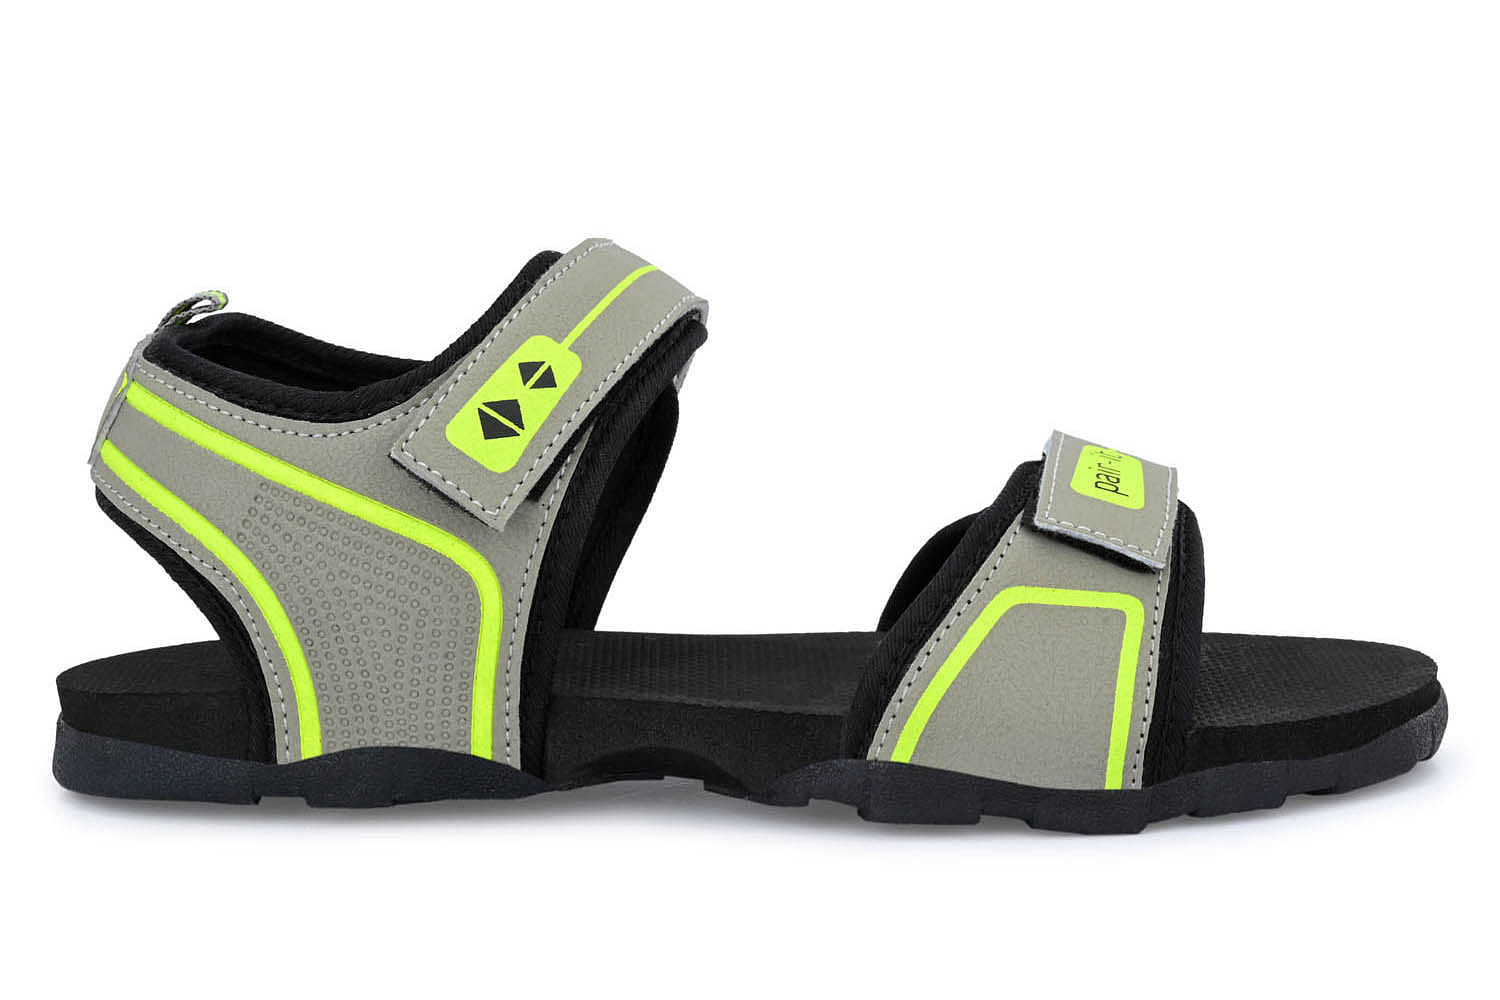 Pair-it Mn Sandals - L.Grey/P.Green-UN-Mn-Sp-Sandal001